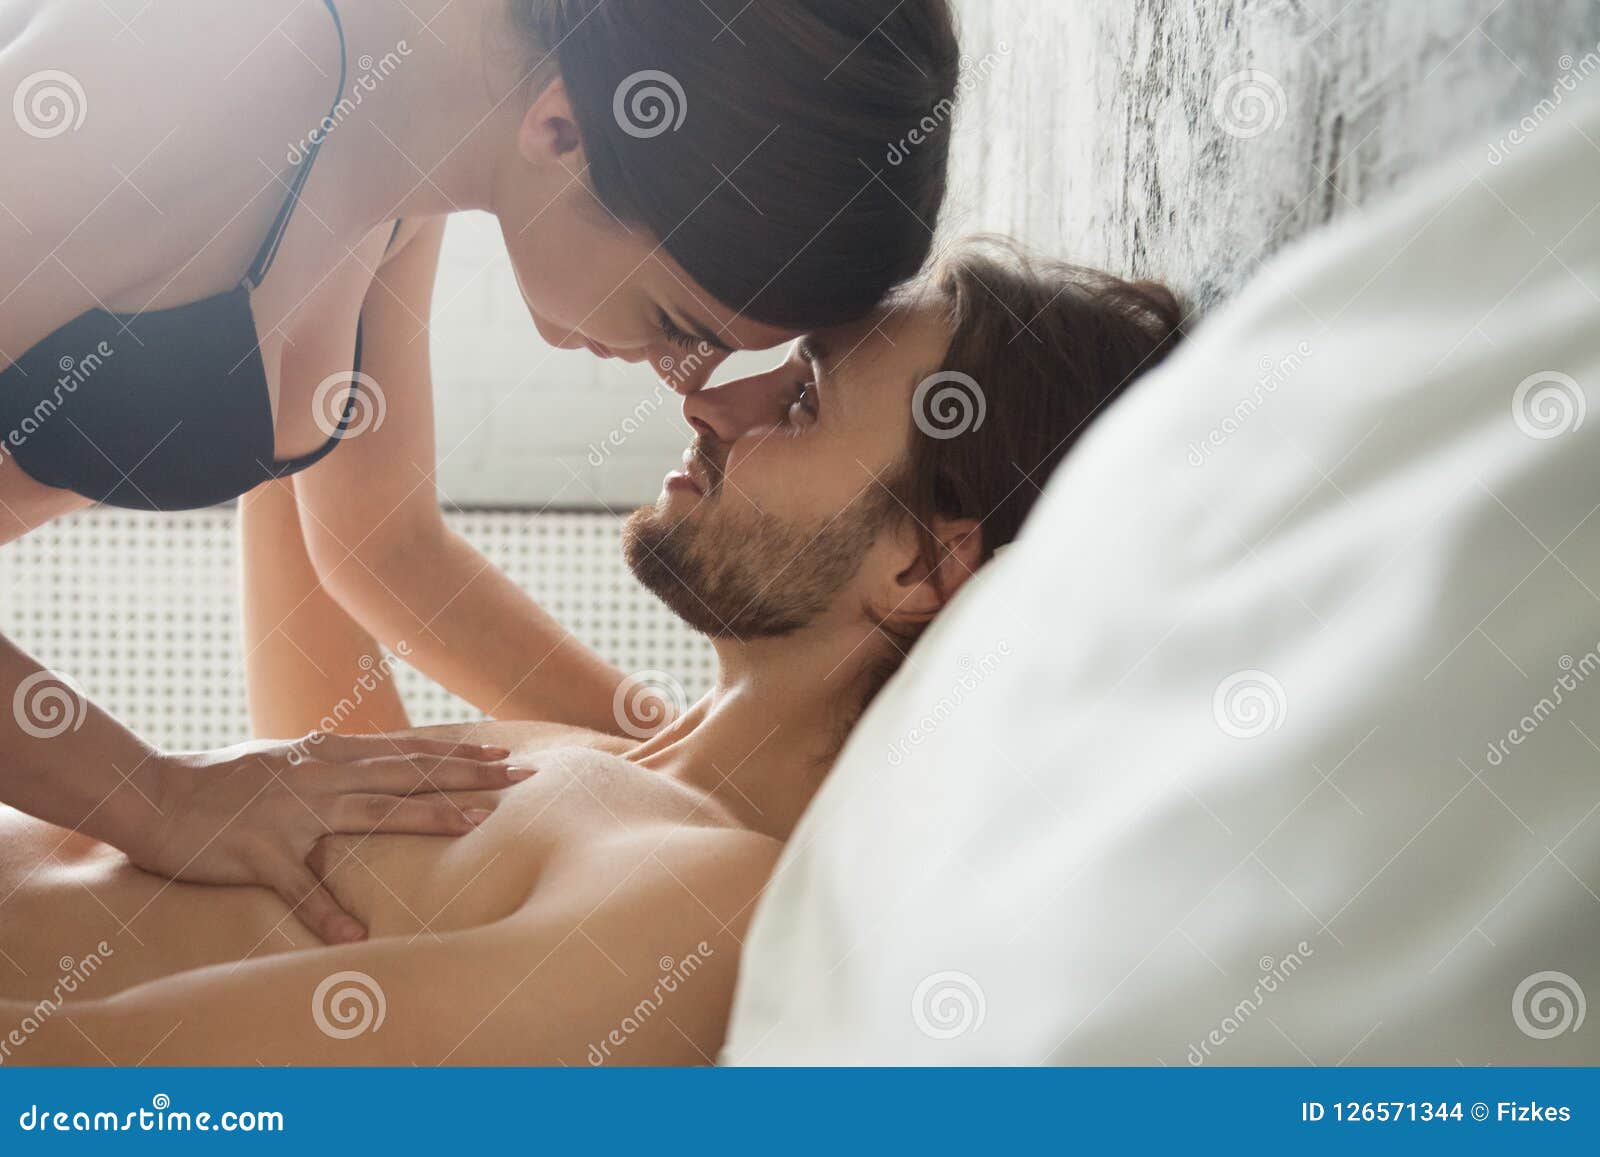 Romantic Couple Sex